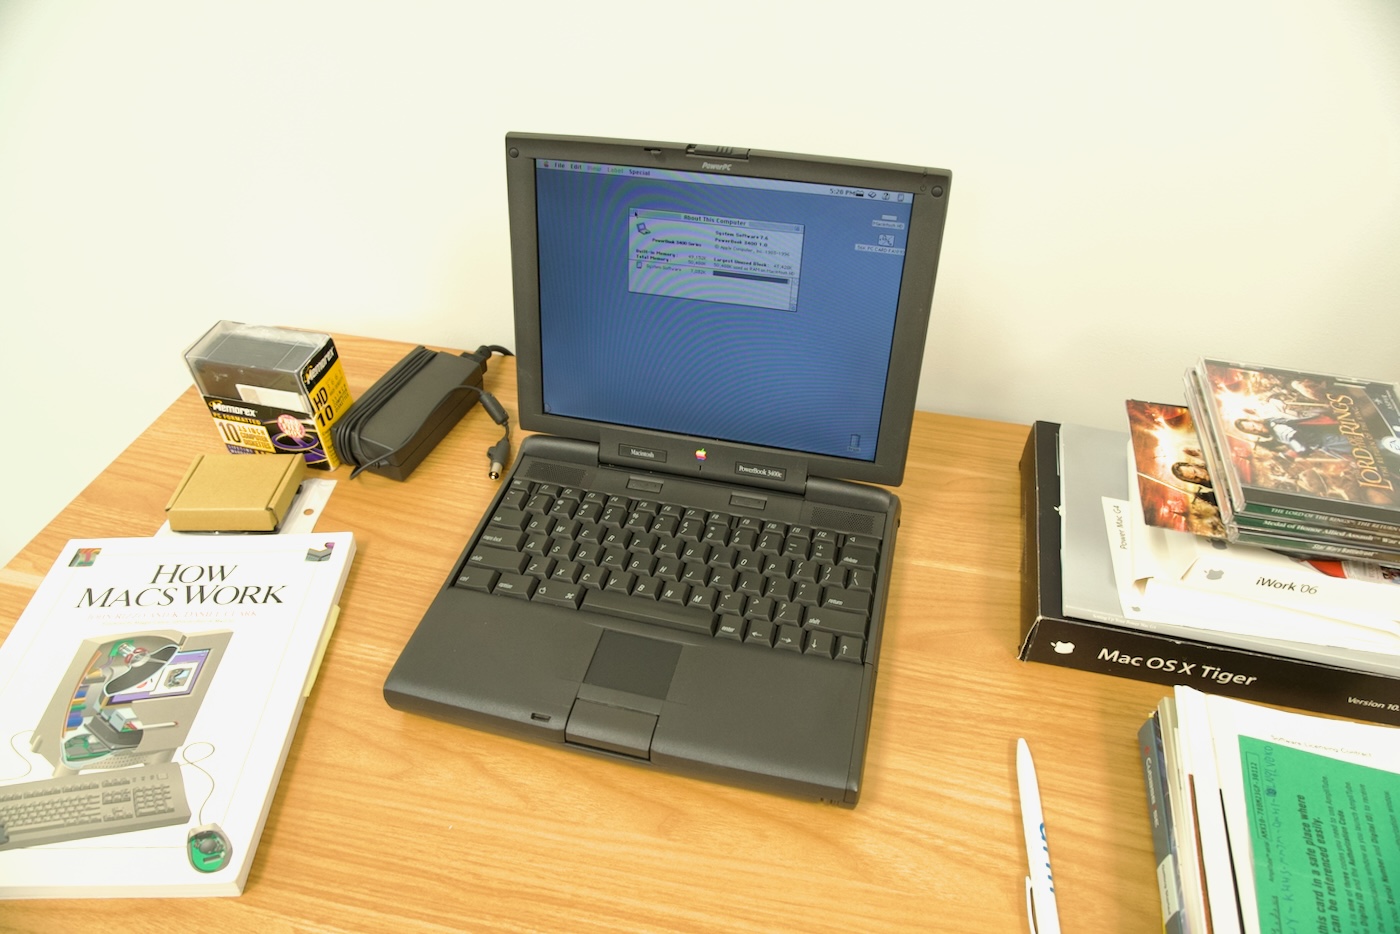 PowerBook 3400c booting into Mac OS 7.6